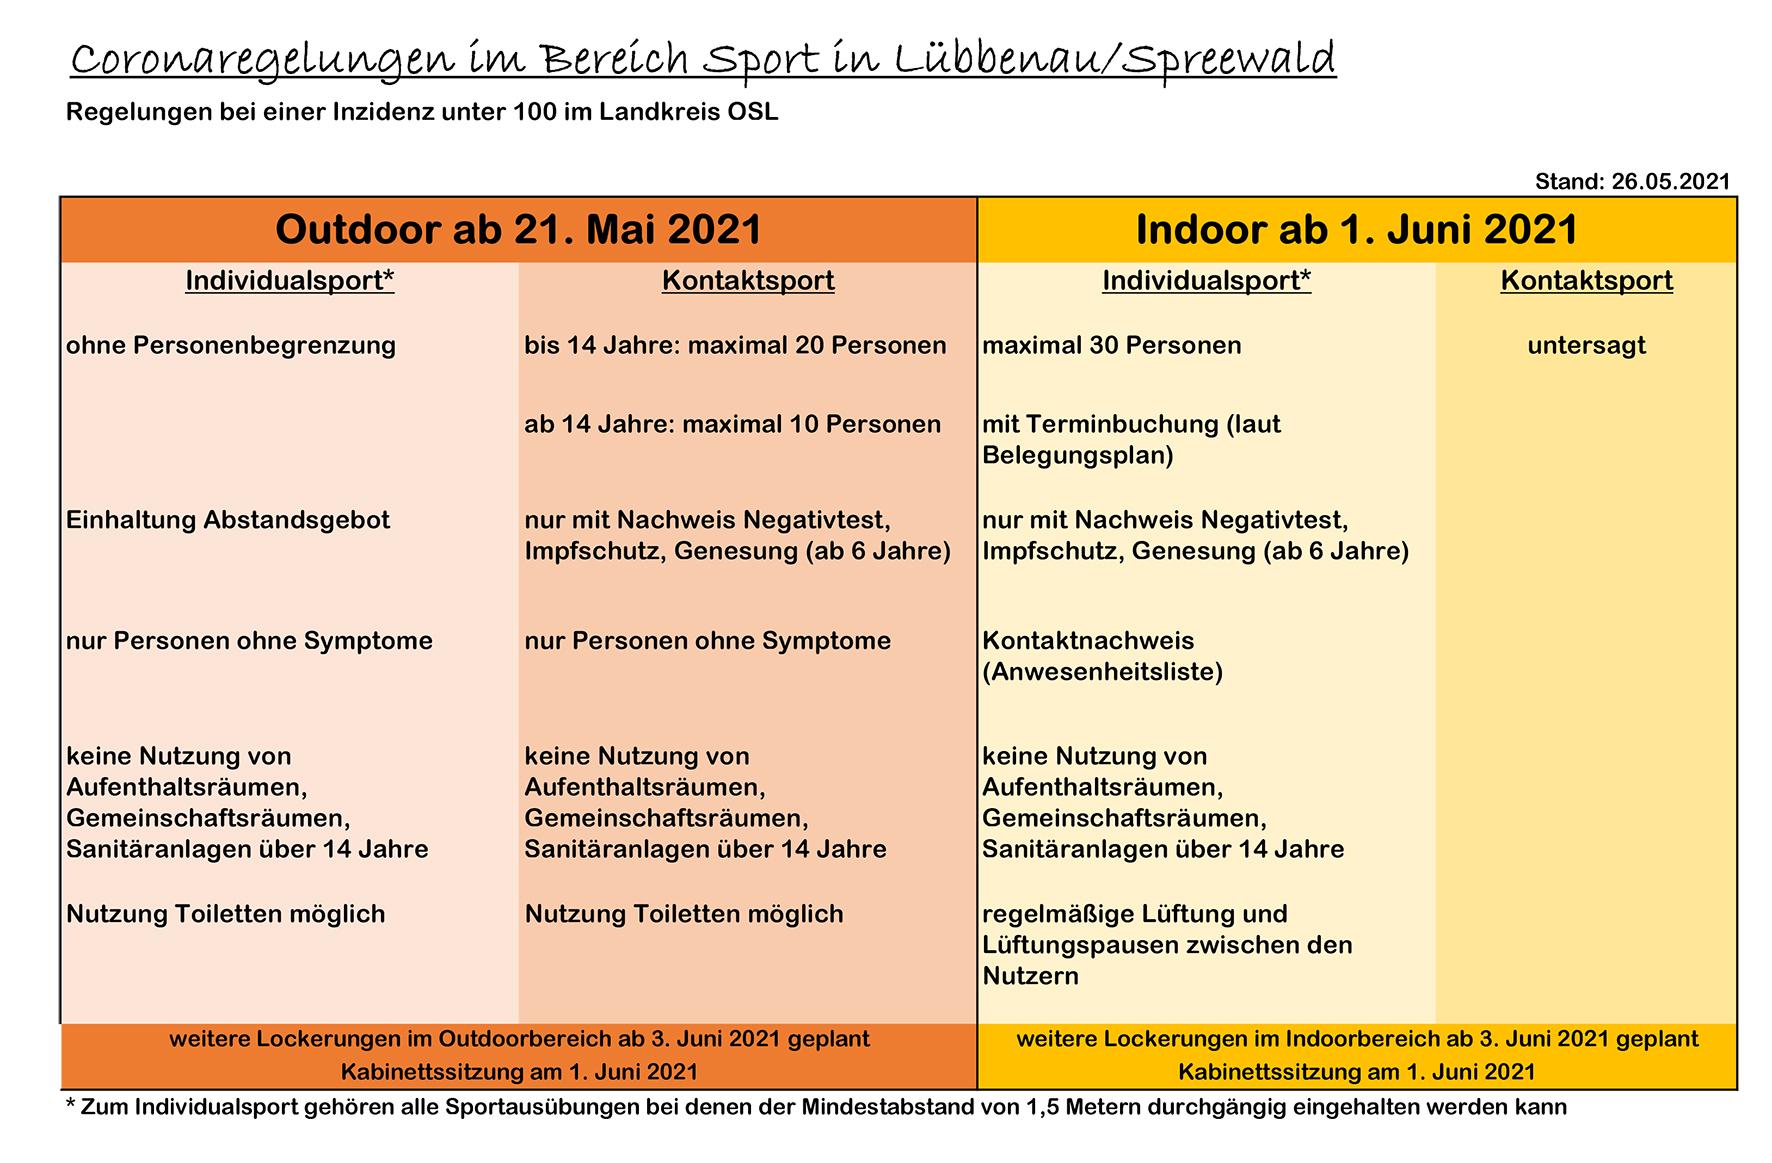 Coronaregelungen im Berich Sport im Mai/Juni 2021 in Lübbenau/Spreewald (26.05.2021)